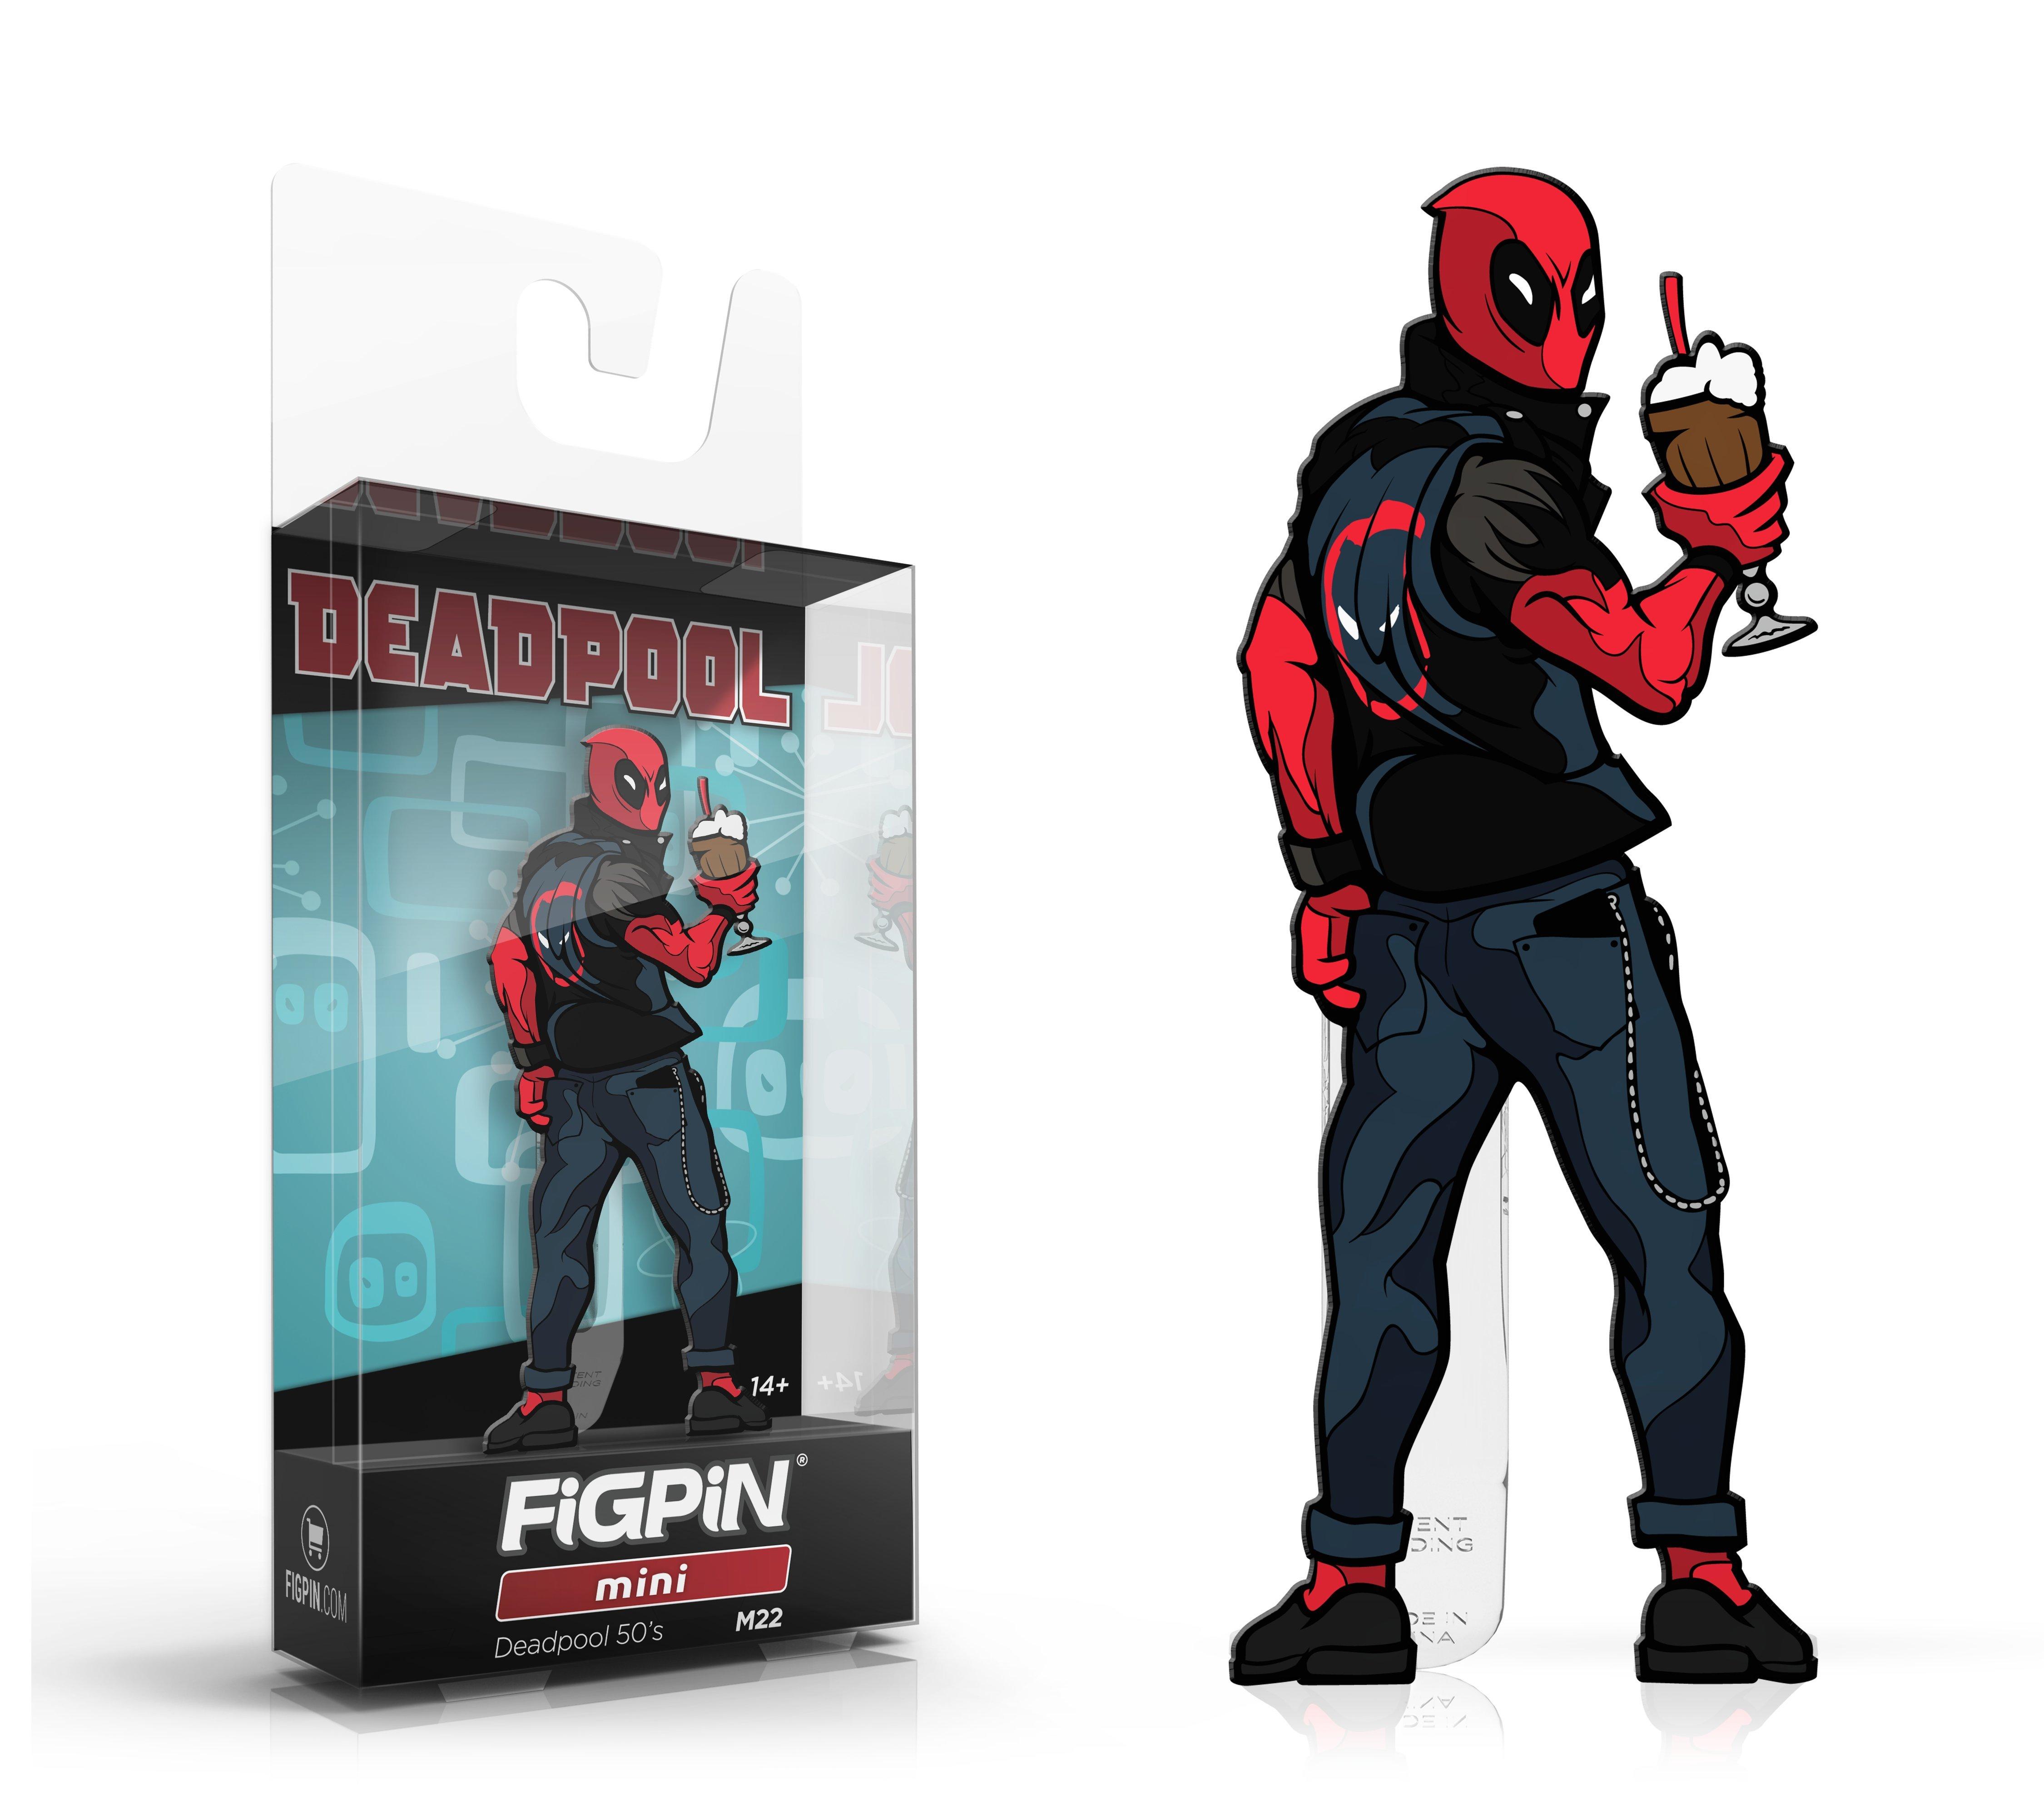 Deadpool 50s Figpin Mini Gamestop